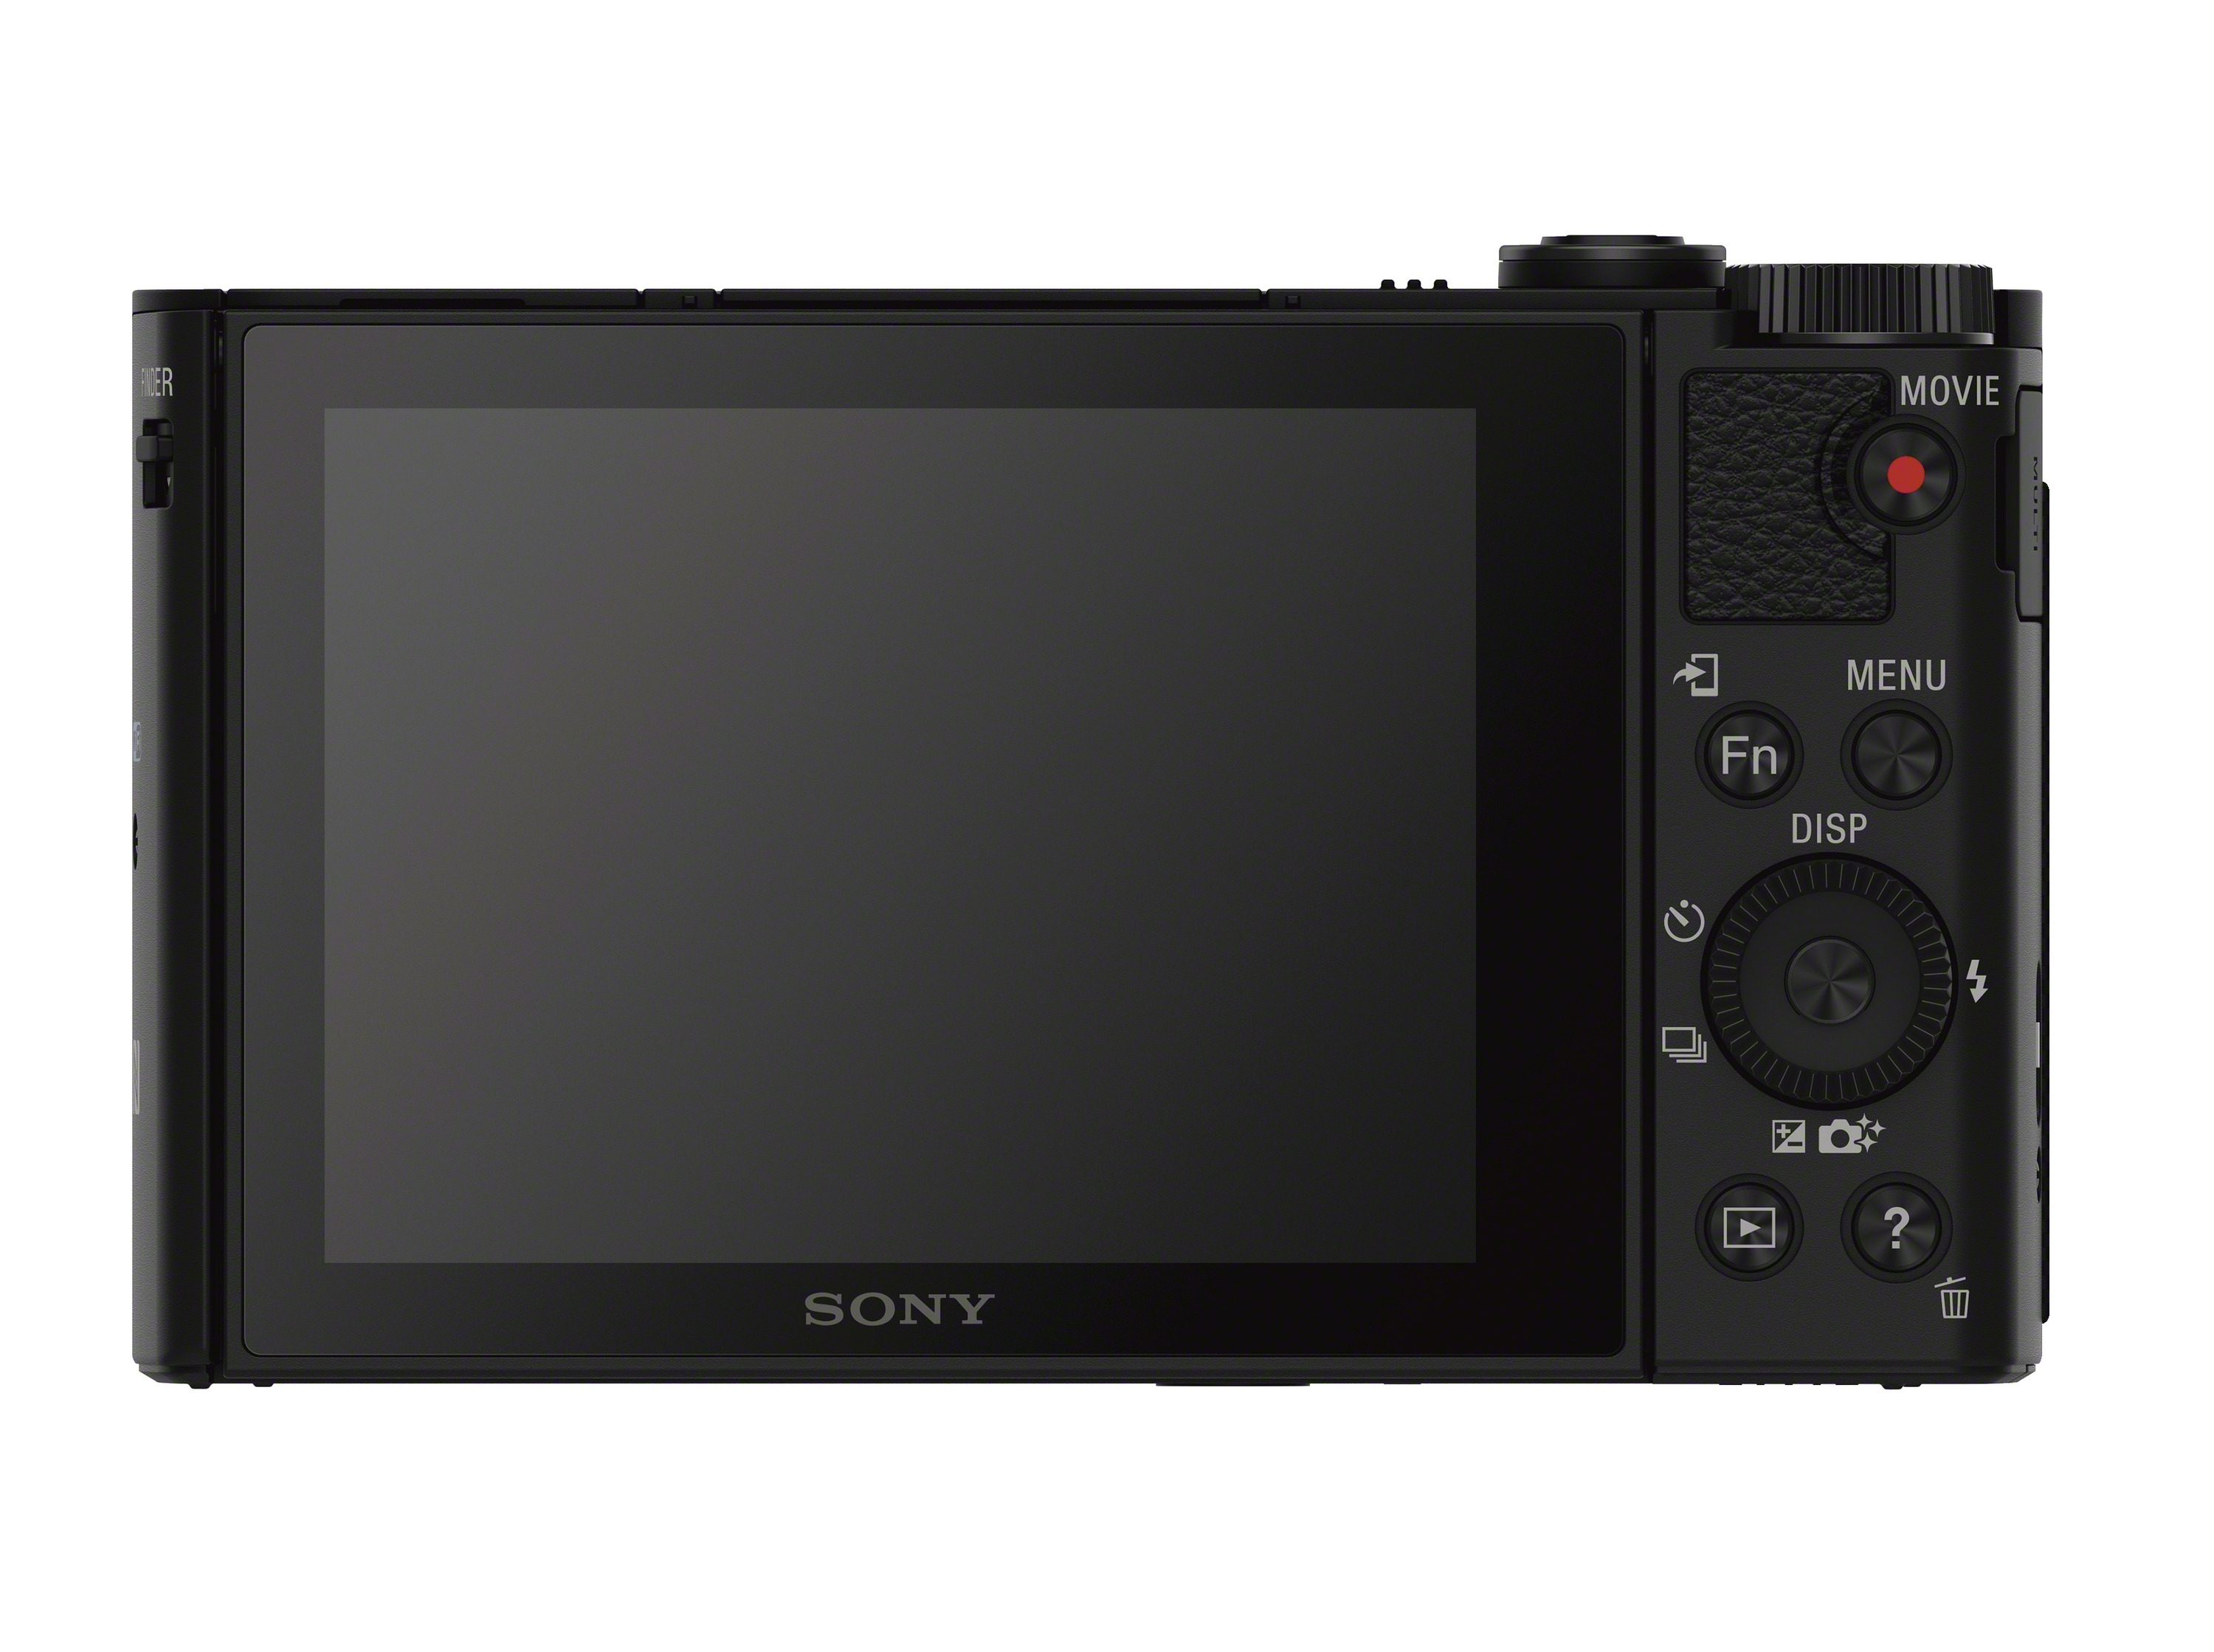 Zeiss Cyber-shot NFC opt. Fine Schwarz, WLAN Digitalkamera , 30x SONY LCD, DSC-HX80 Xtra Zoom,